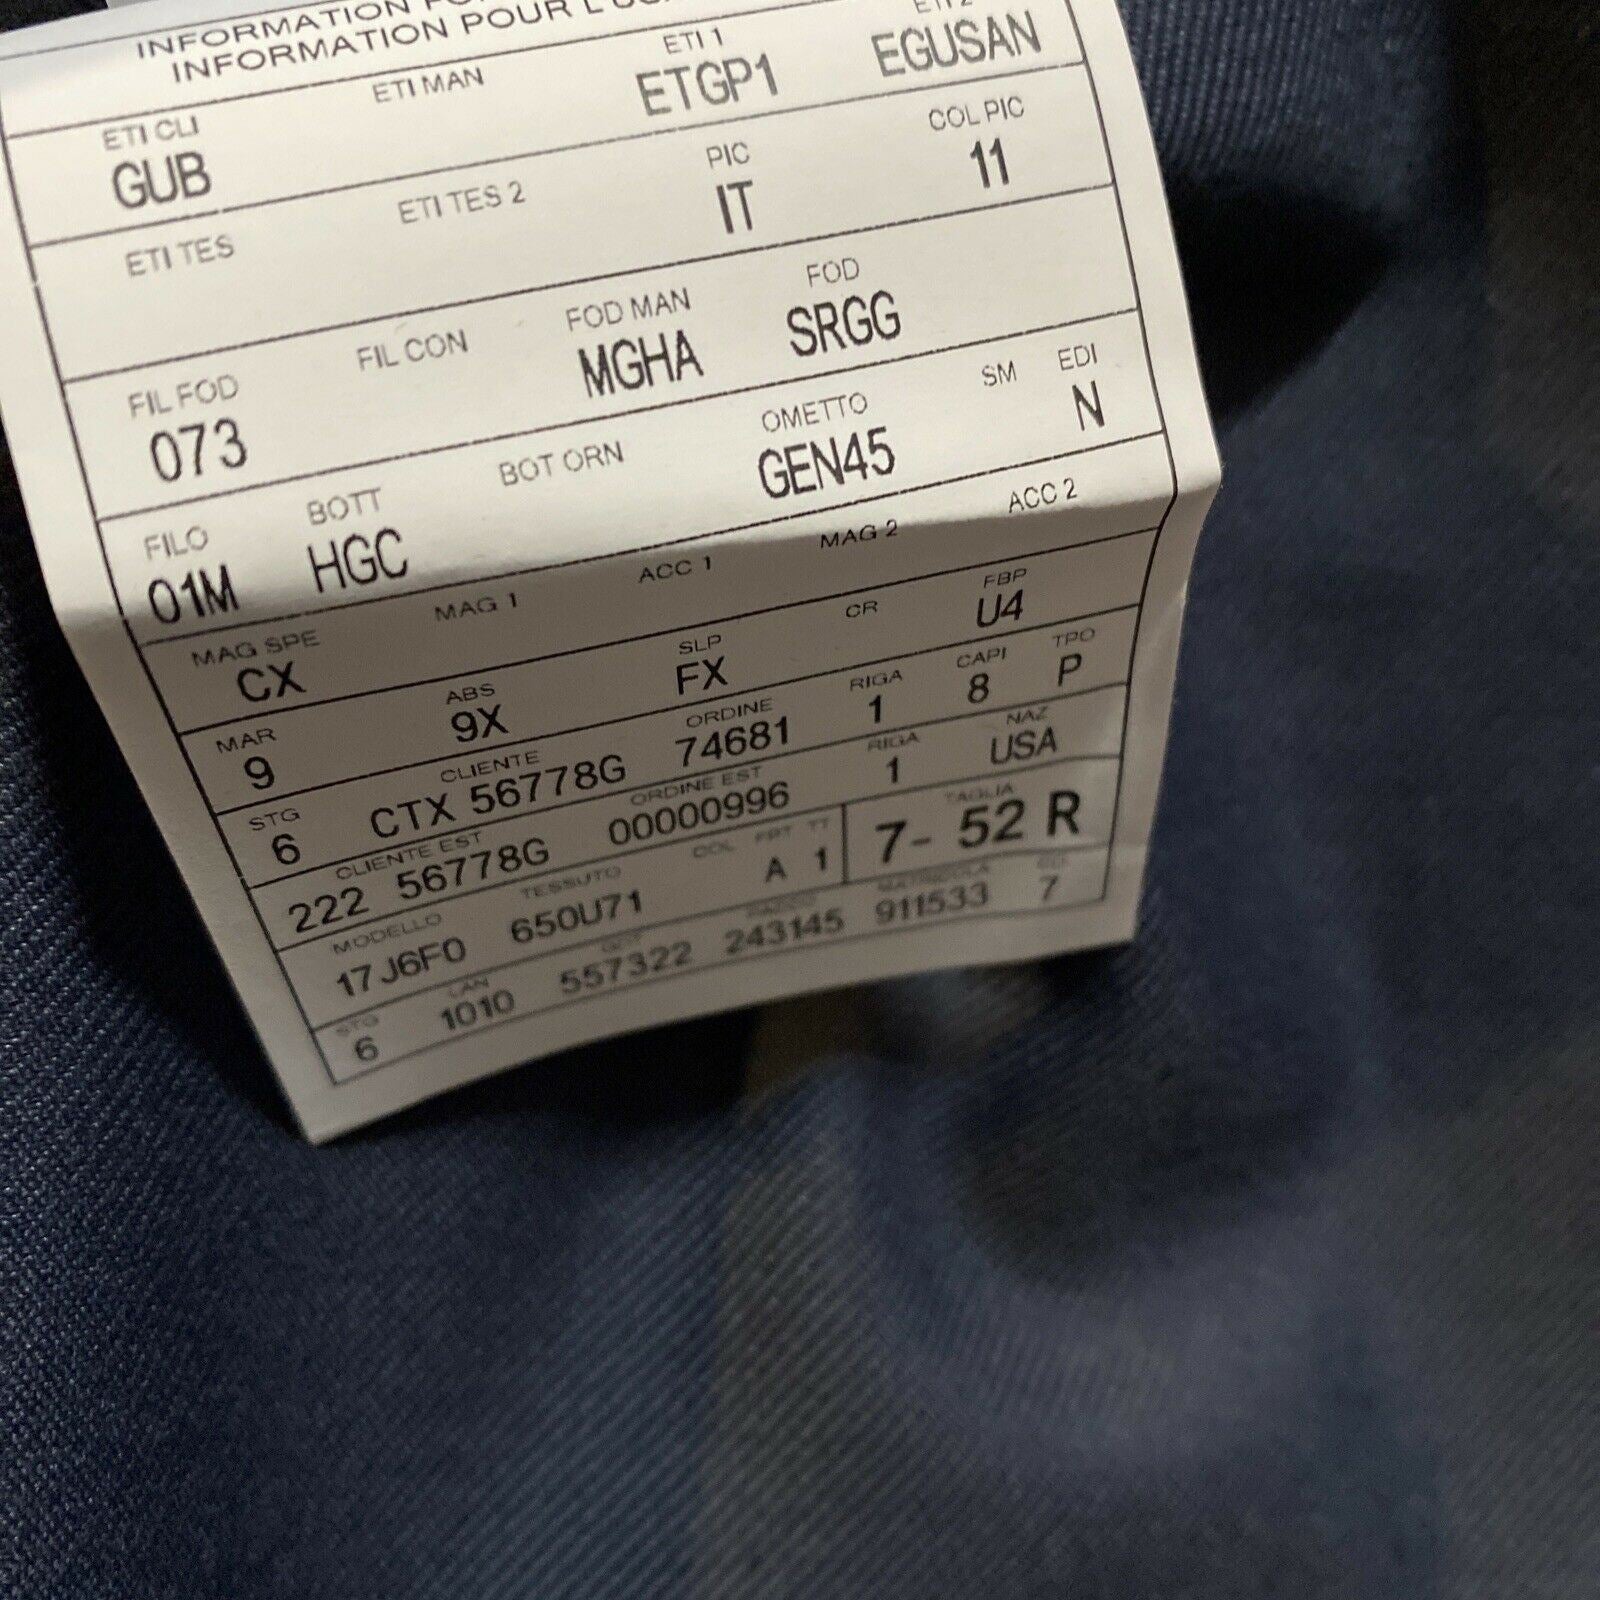 Мужская спортивная куртка Gucci, пиджак, синий, NWT $3200, синий 42R США (52R ЕС) Италия